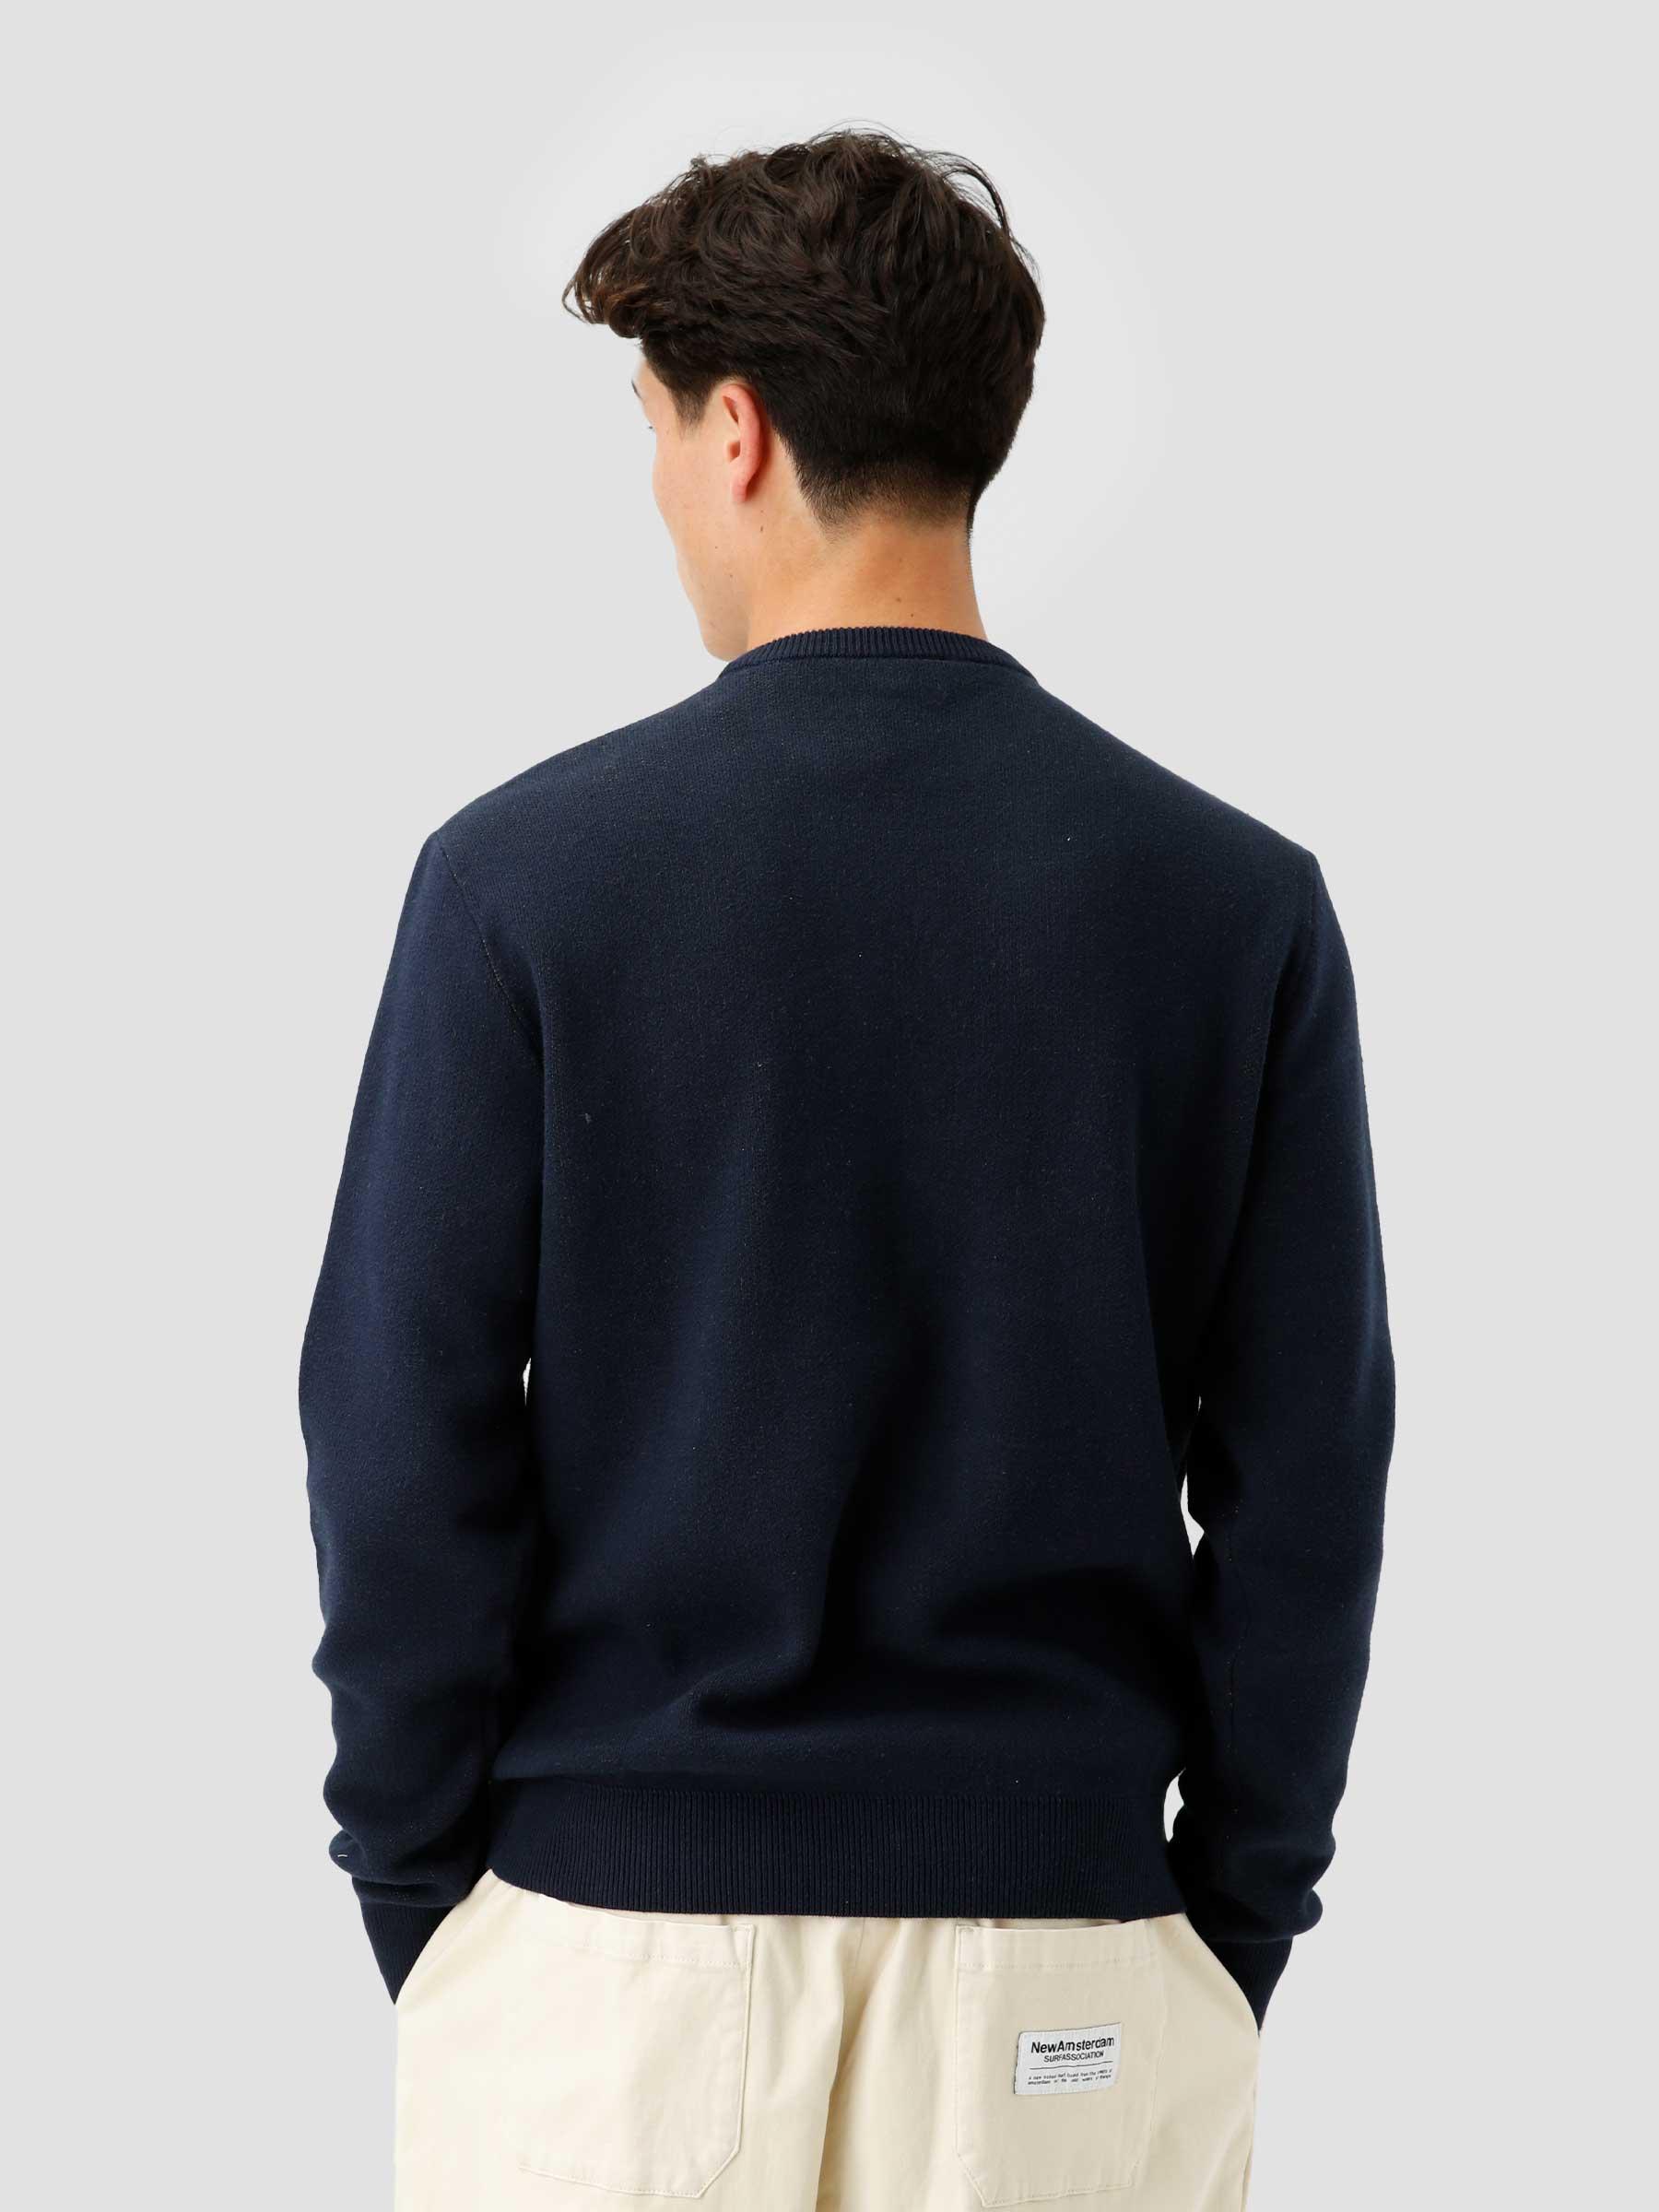 420 Smoked Apple Sweater Navy KN00415